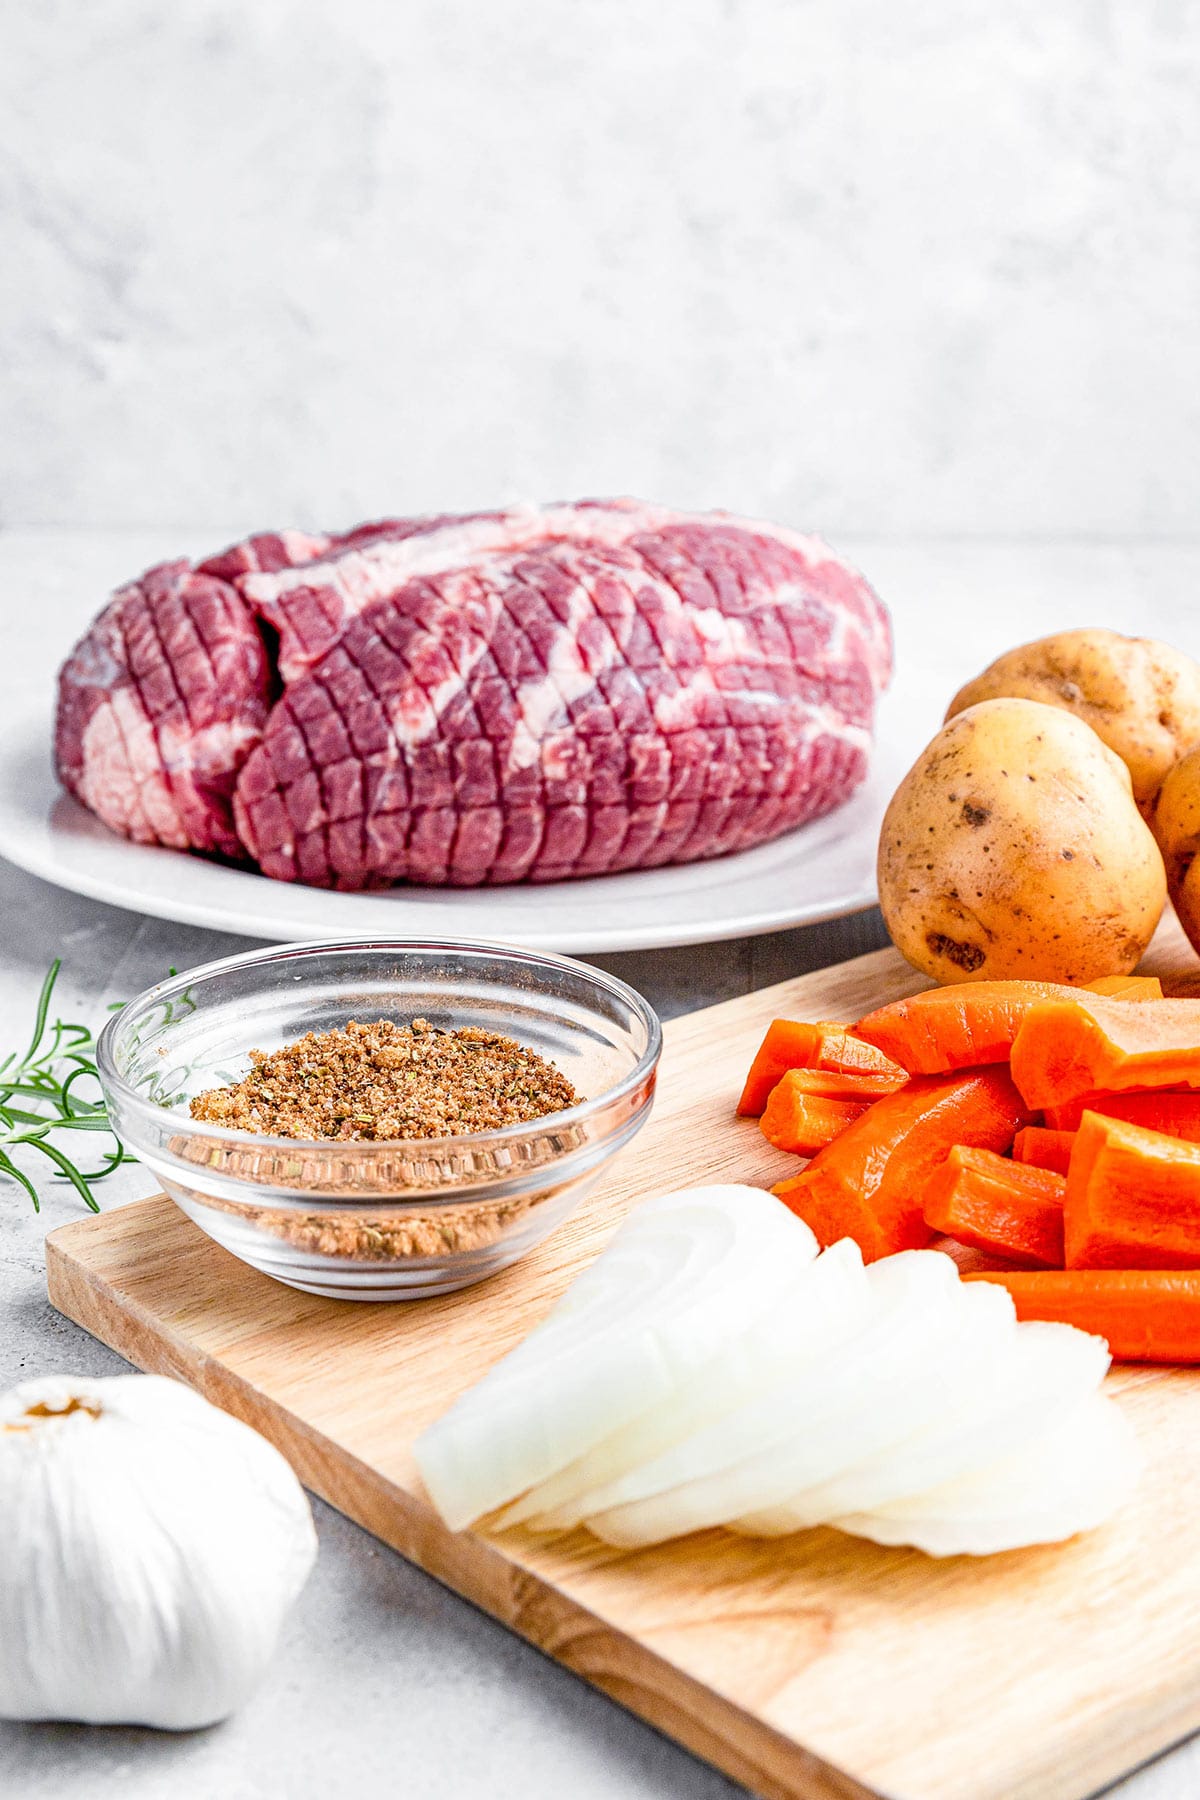 Instant Pot pork roast ingredients - pork shoulder, seasonings, onions, carrots and potatoes